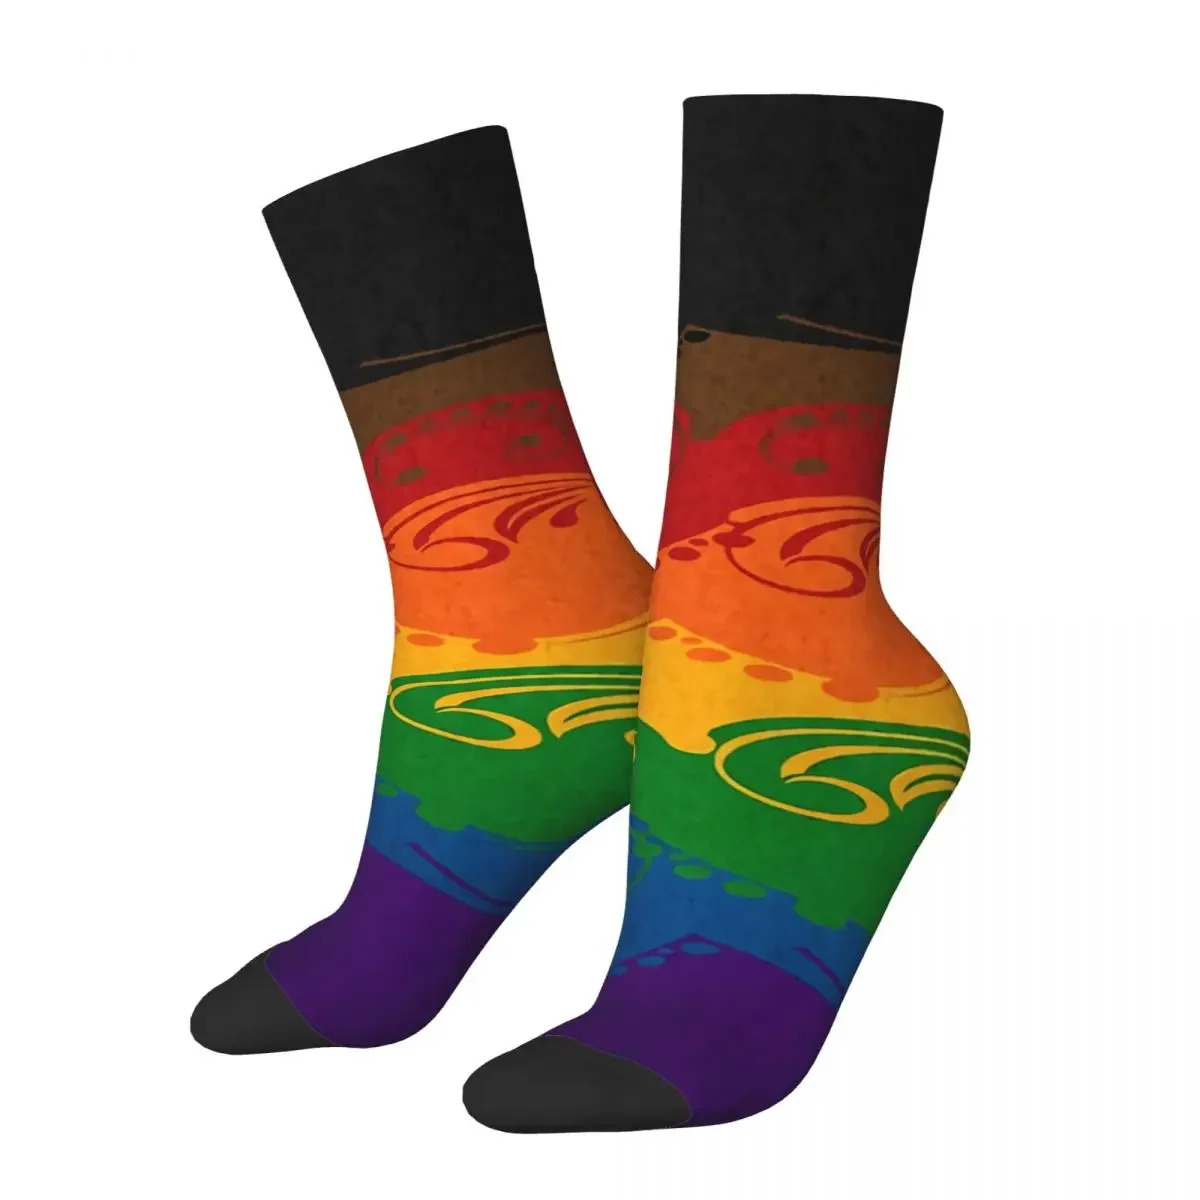 

Happy Men's Socks Ornamental Inclusive Rainbow Vintage Harajuku LGBTQ Pride Hip Hop Crew Crazy Sock Gift Pattern Printed